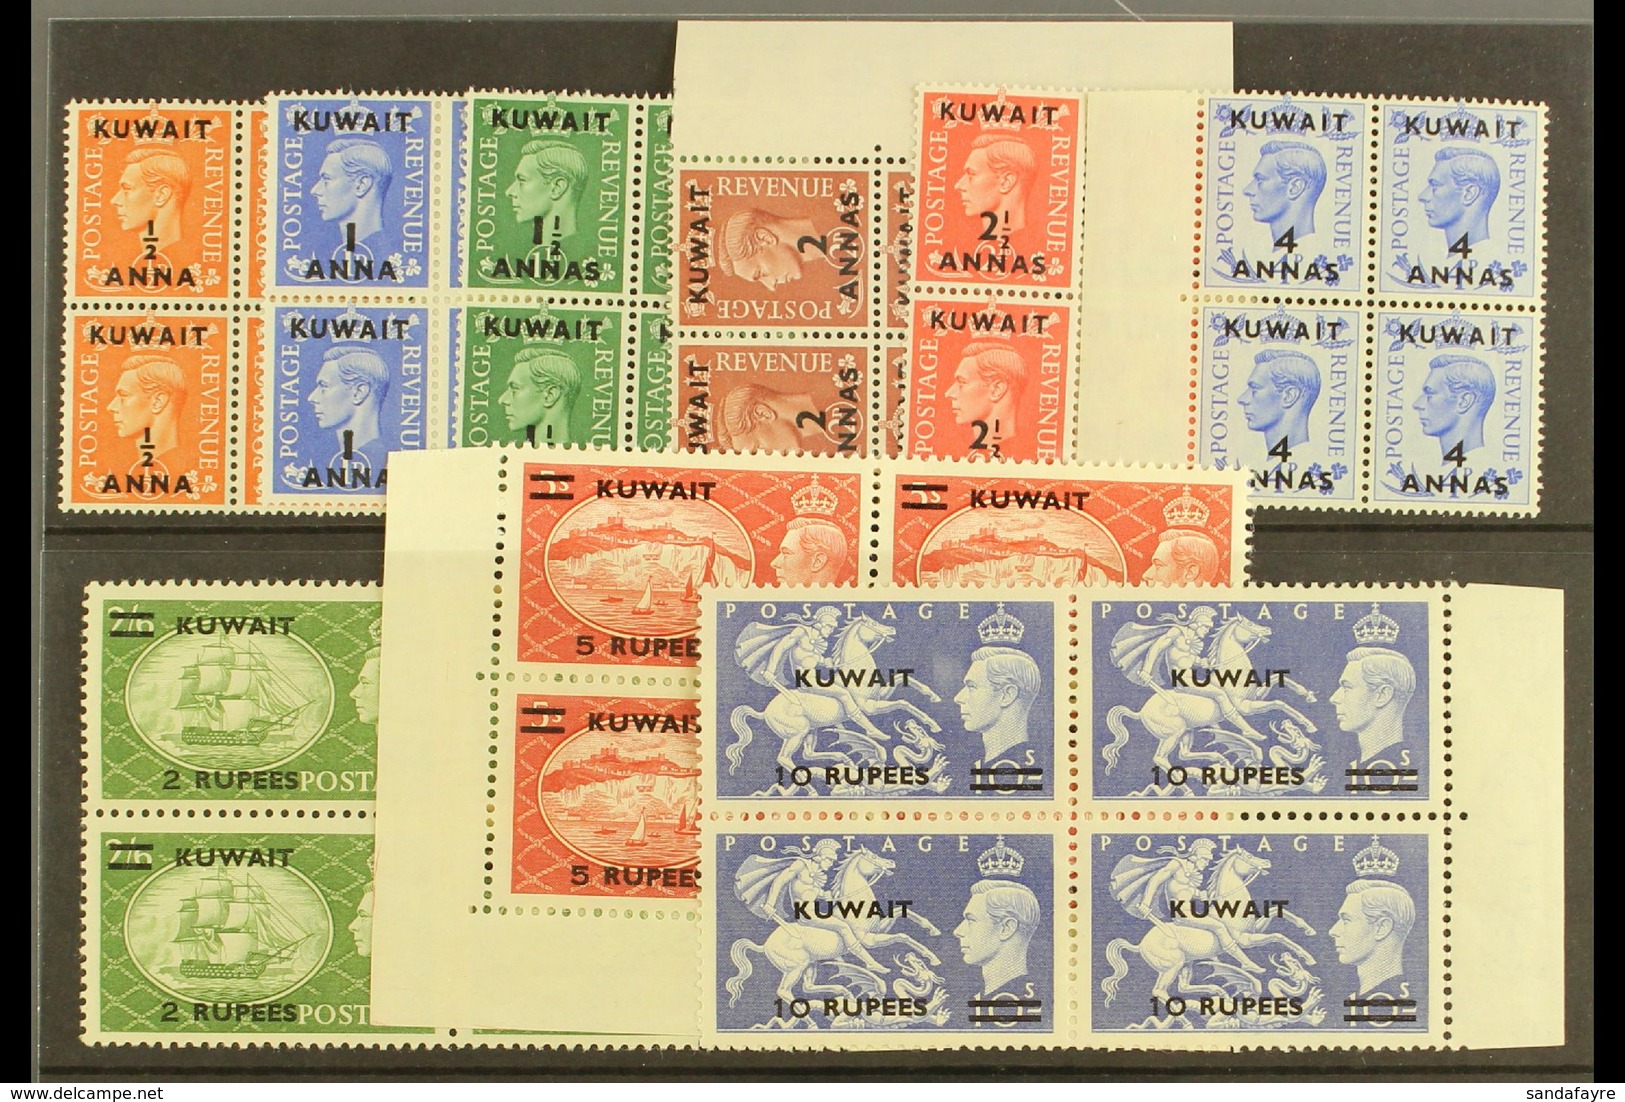 1950-4 KGVI GB Overprints Set In BLOCKS OF FOUR, SG 84/92, Fine, Never Hinged Mint (9 Blocks). For More Images, Please V - Kuwait